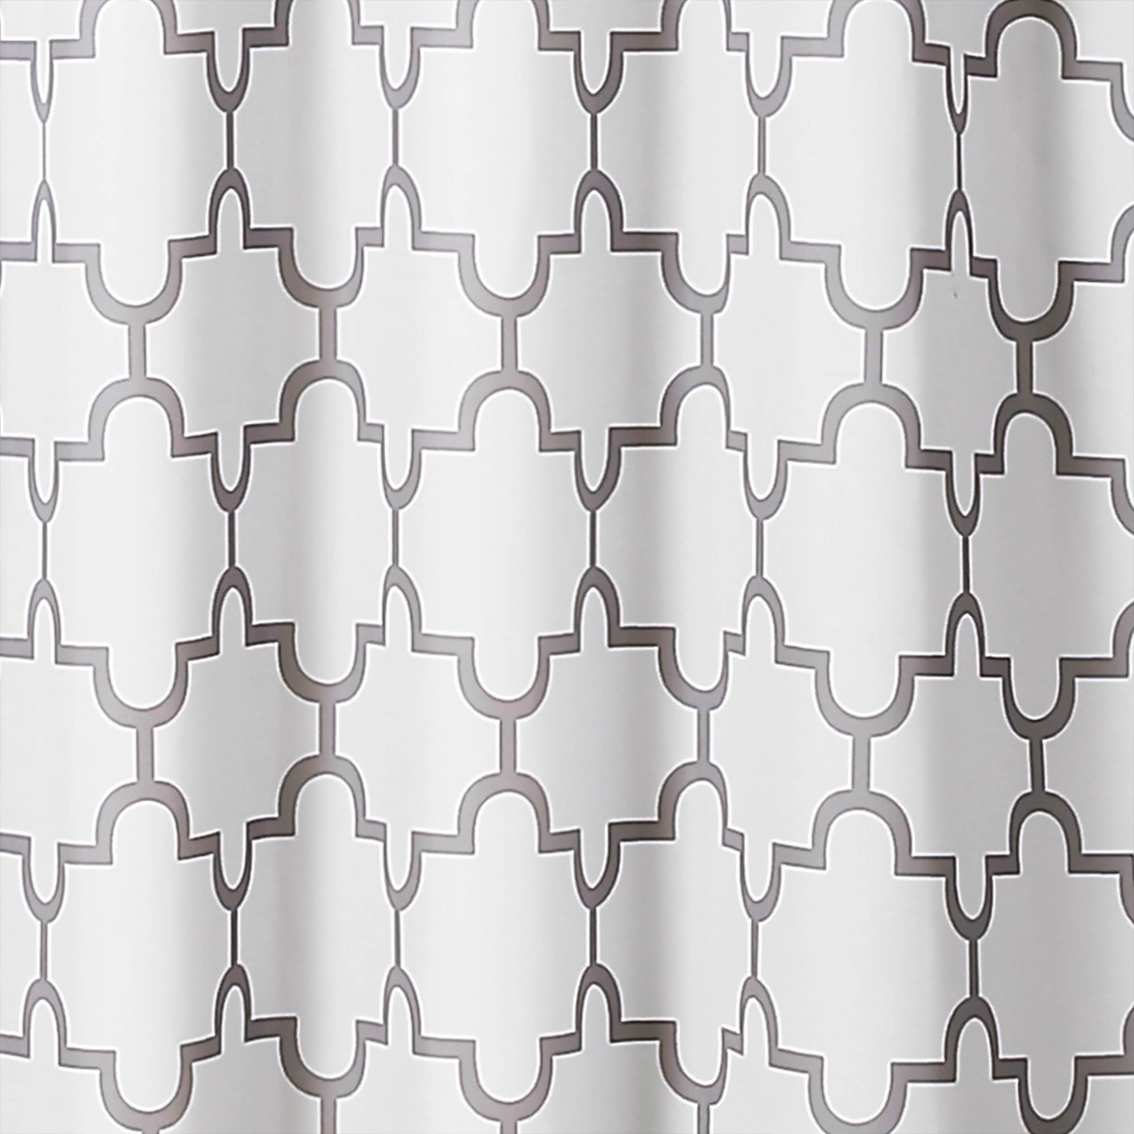 Lush Decor Bellagio 72 x 72 in. Single Shower Curtain - Image 3 of 3